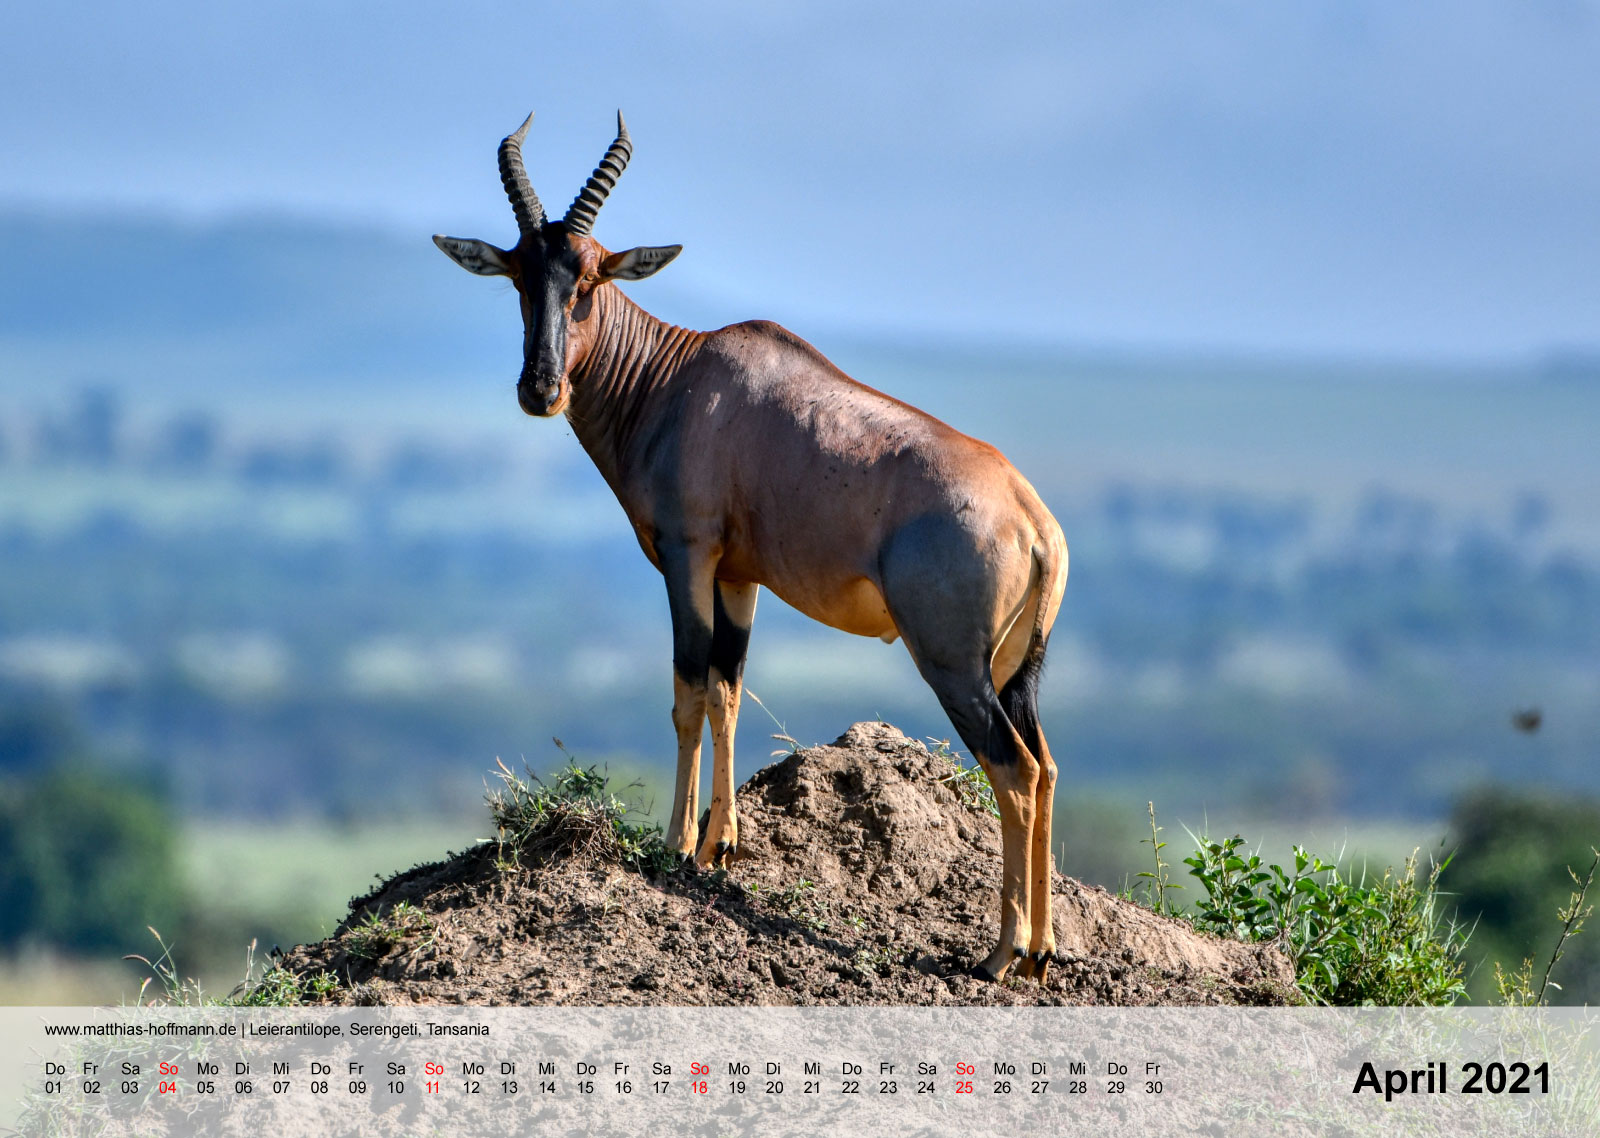 Leierantilope, Serengeti, Tansania | Kalender 2021 - April